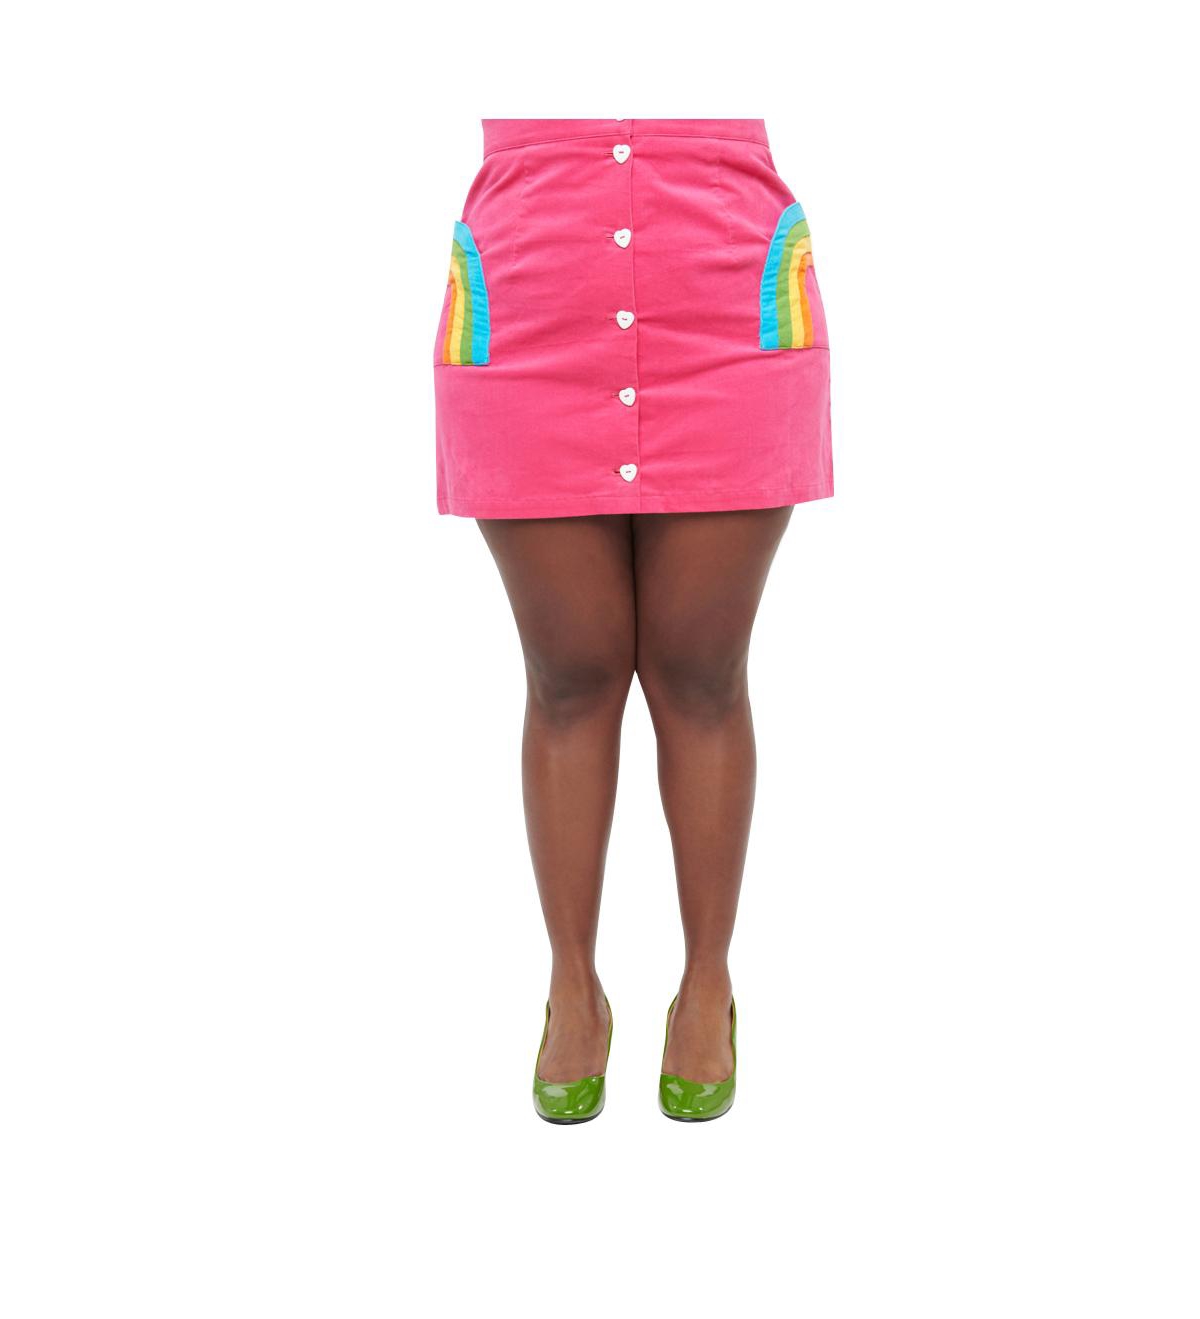 Plus Size Match Game Mini Skirt - Hot pink  rainbow